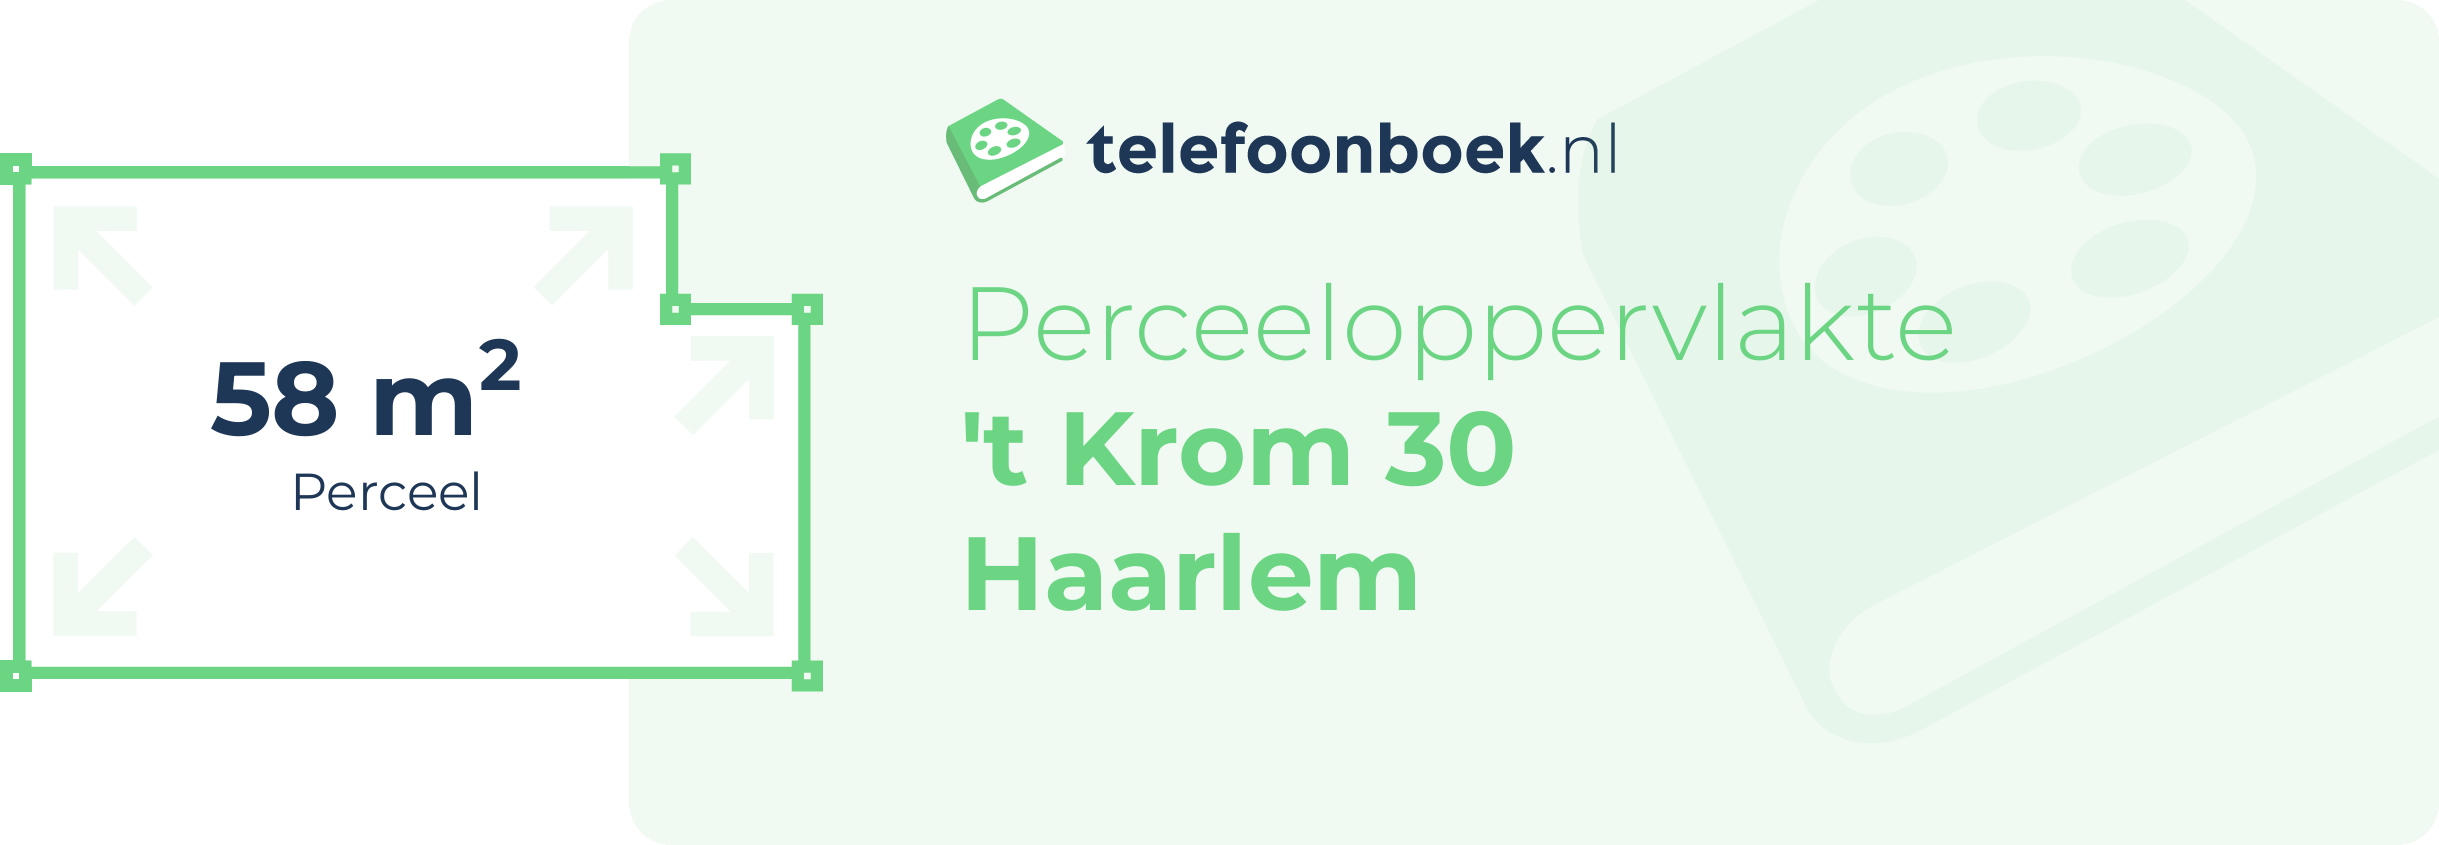 Perceeloppervlakte 't Krom 30 Haarlem